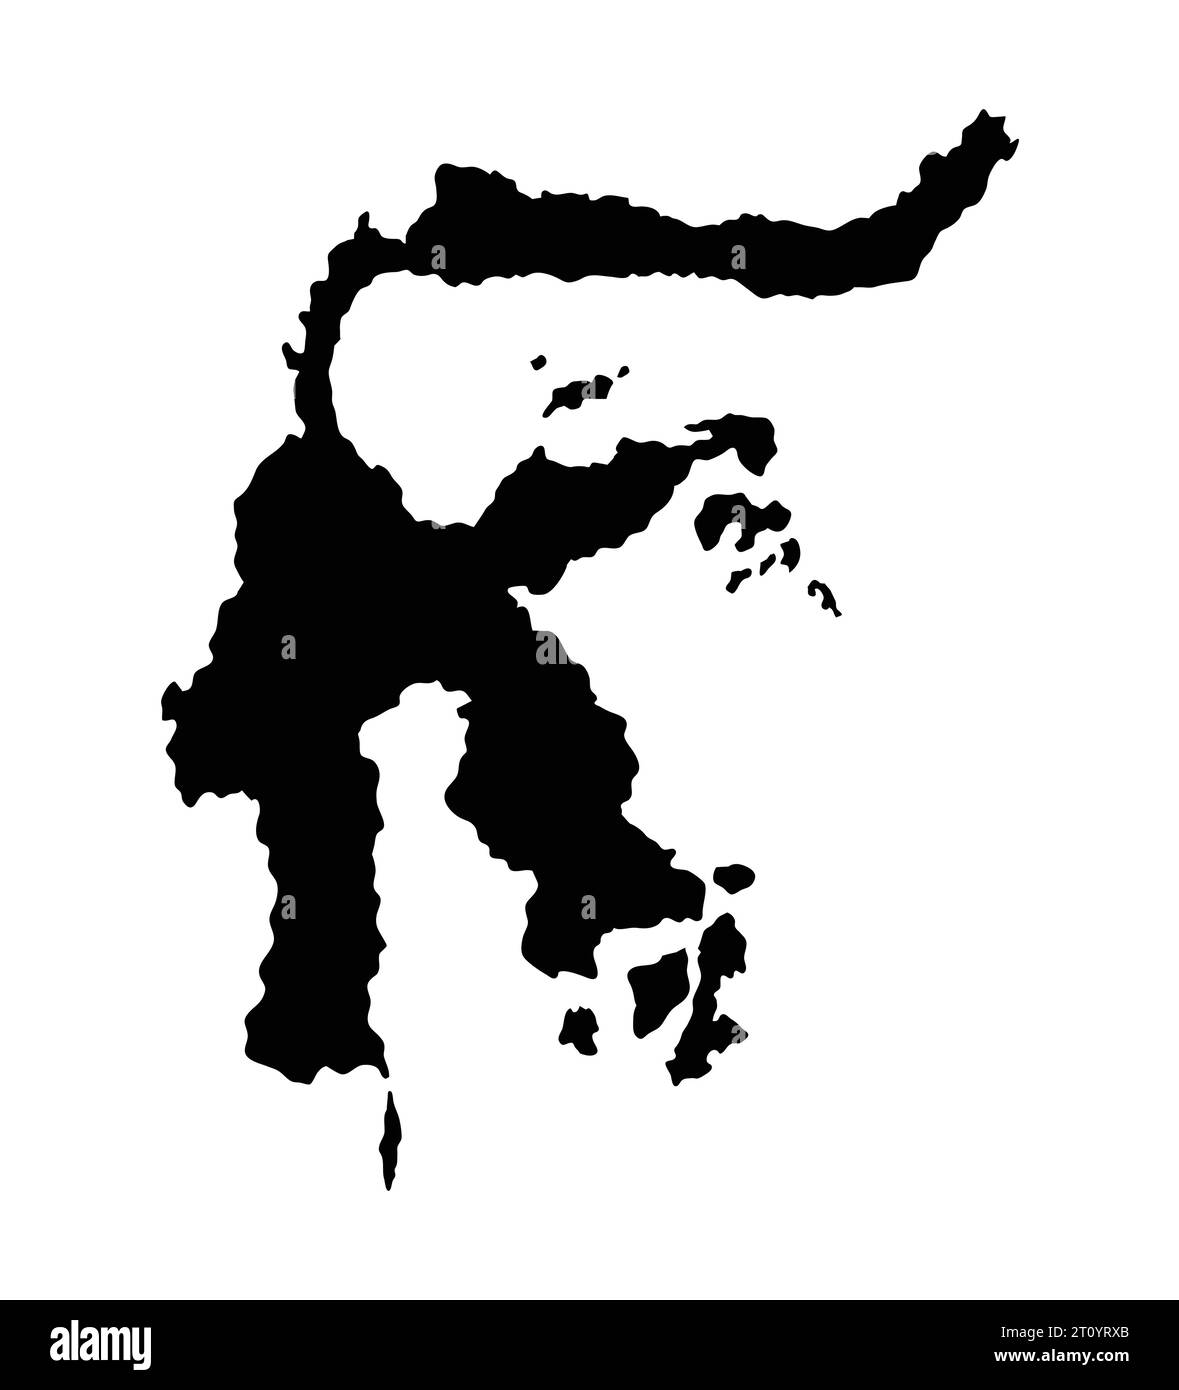 Sulawesi Indonesia island map silhouette region territory, black shape style illustration Stock Vector